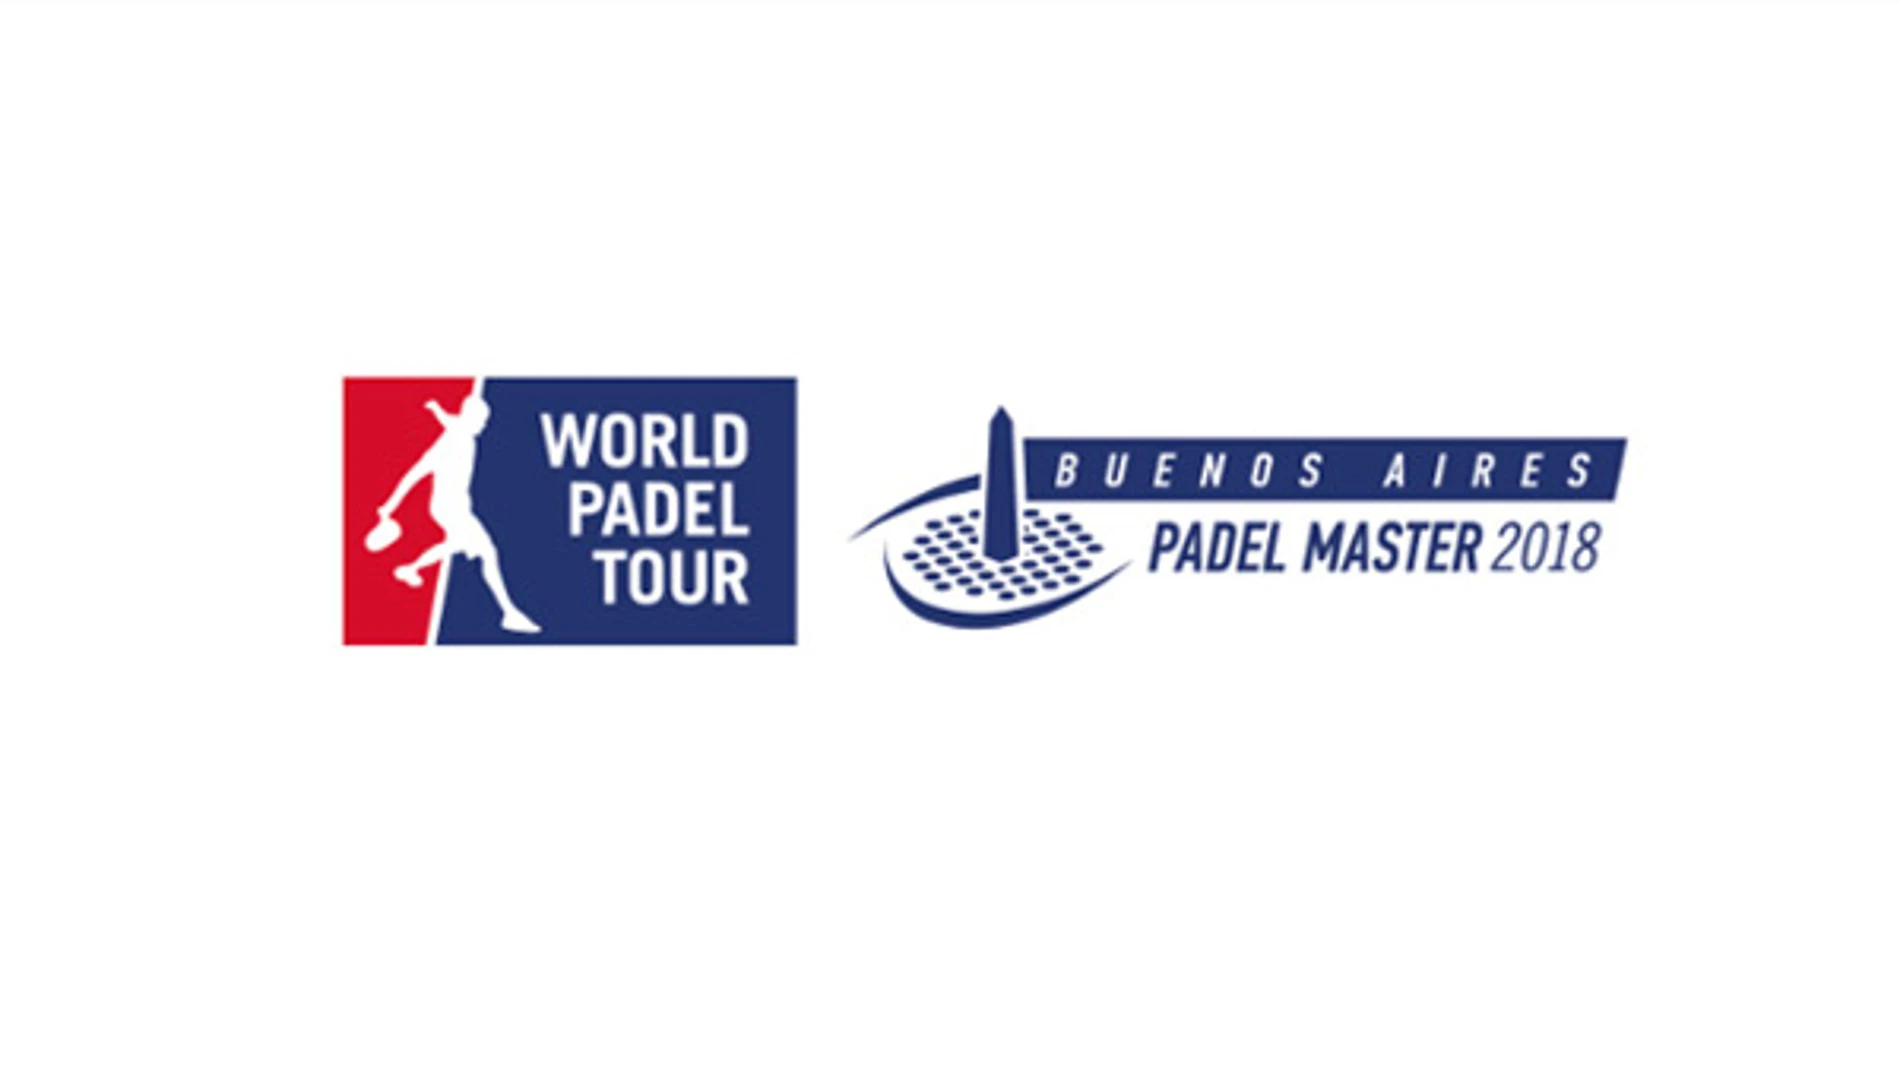 Buenos Aires Padel Master